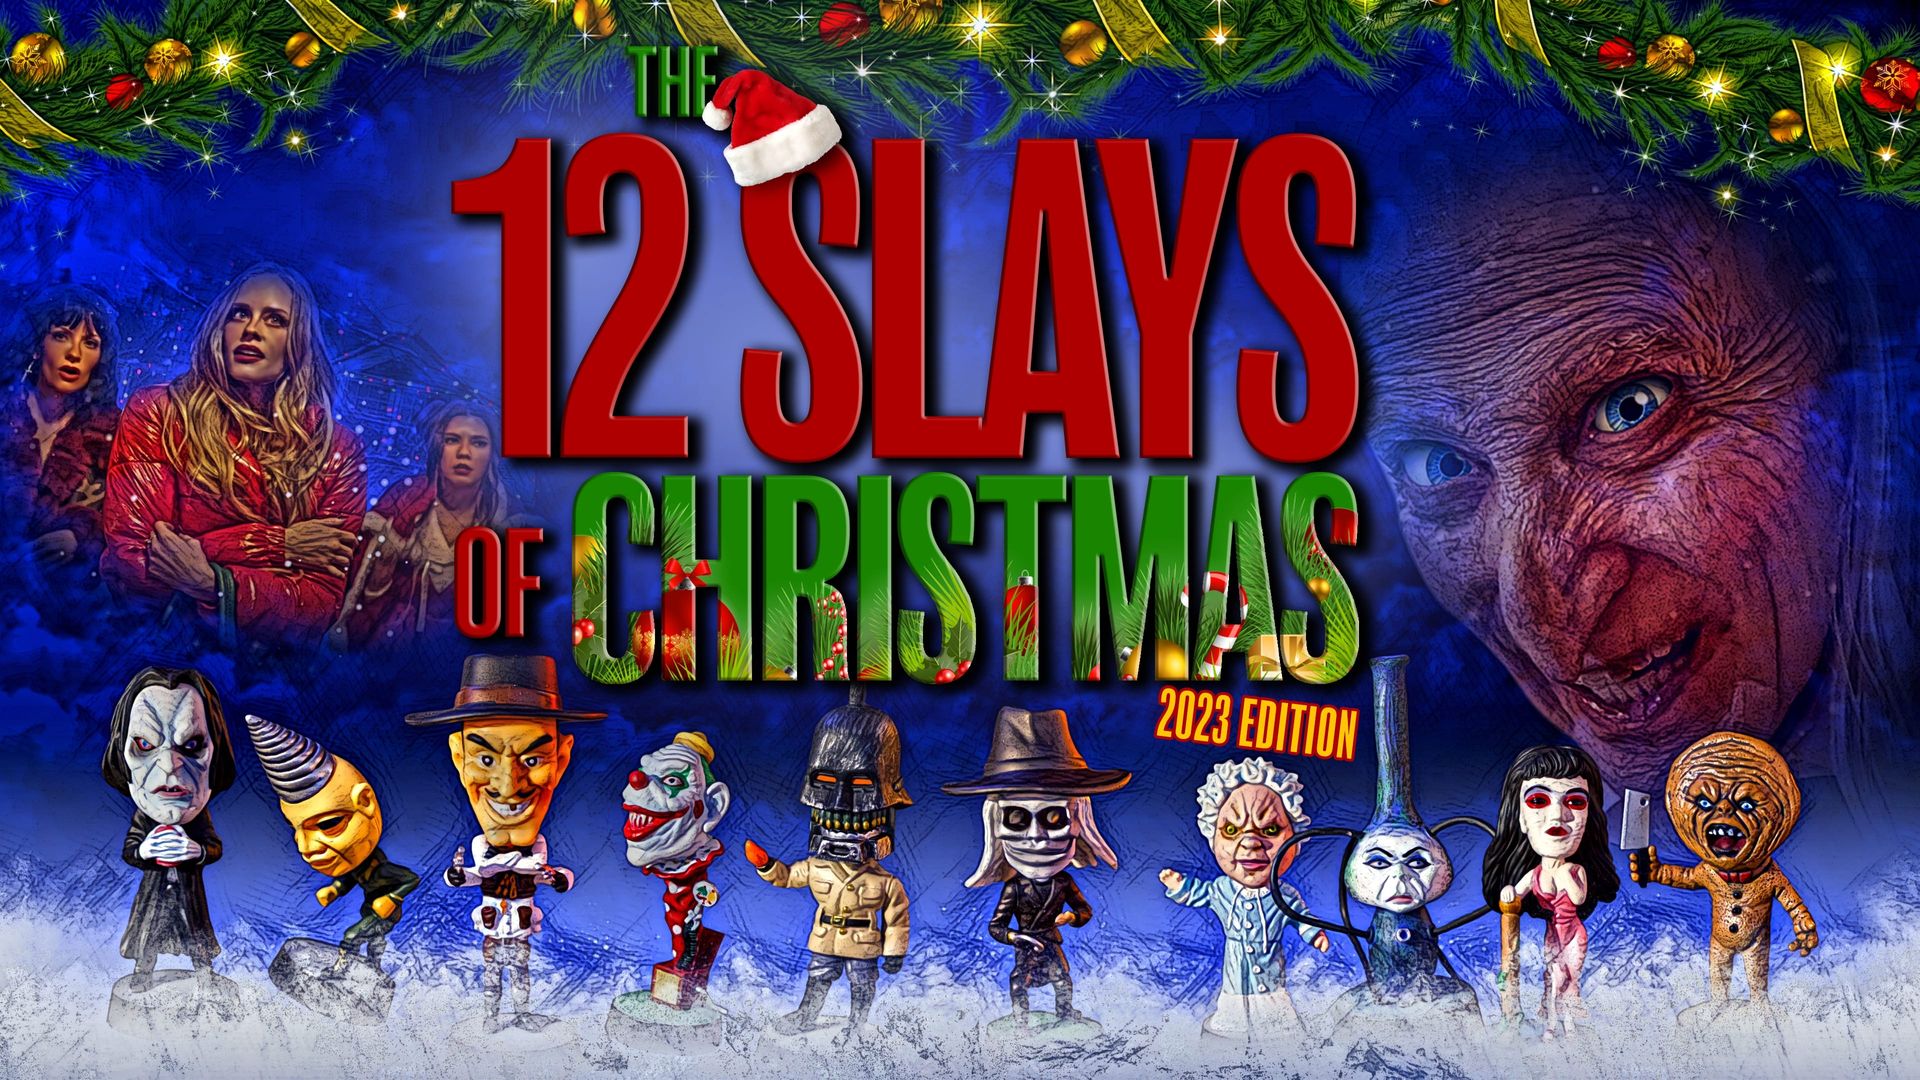 The Twelve Slays of Christmas: 2023 Edition background